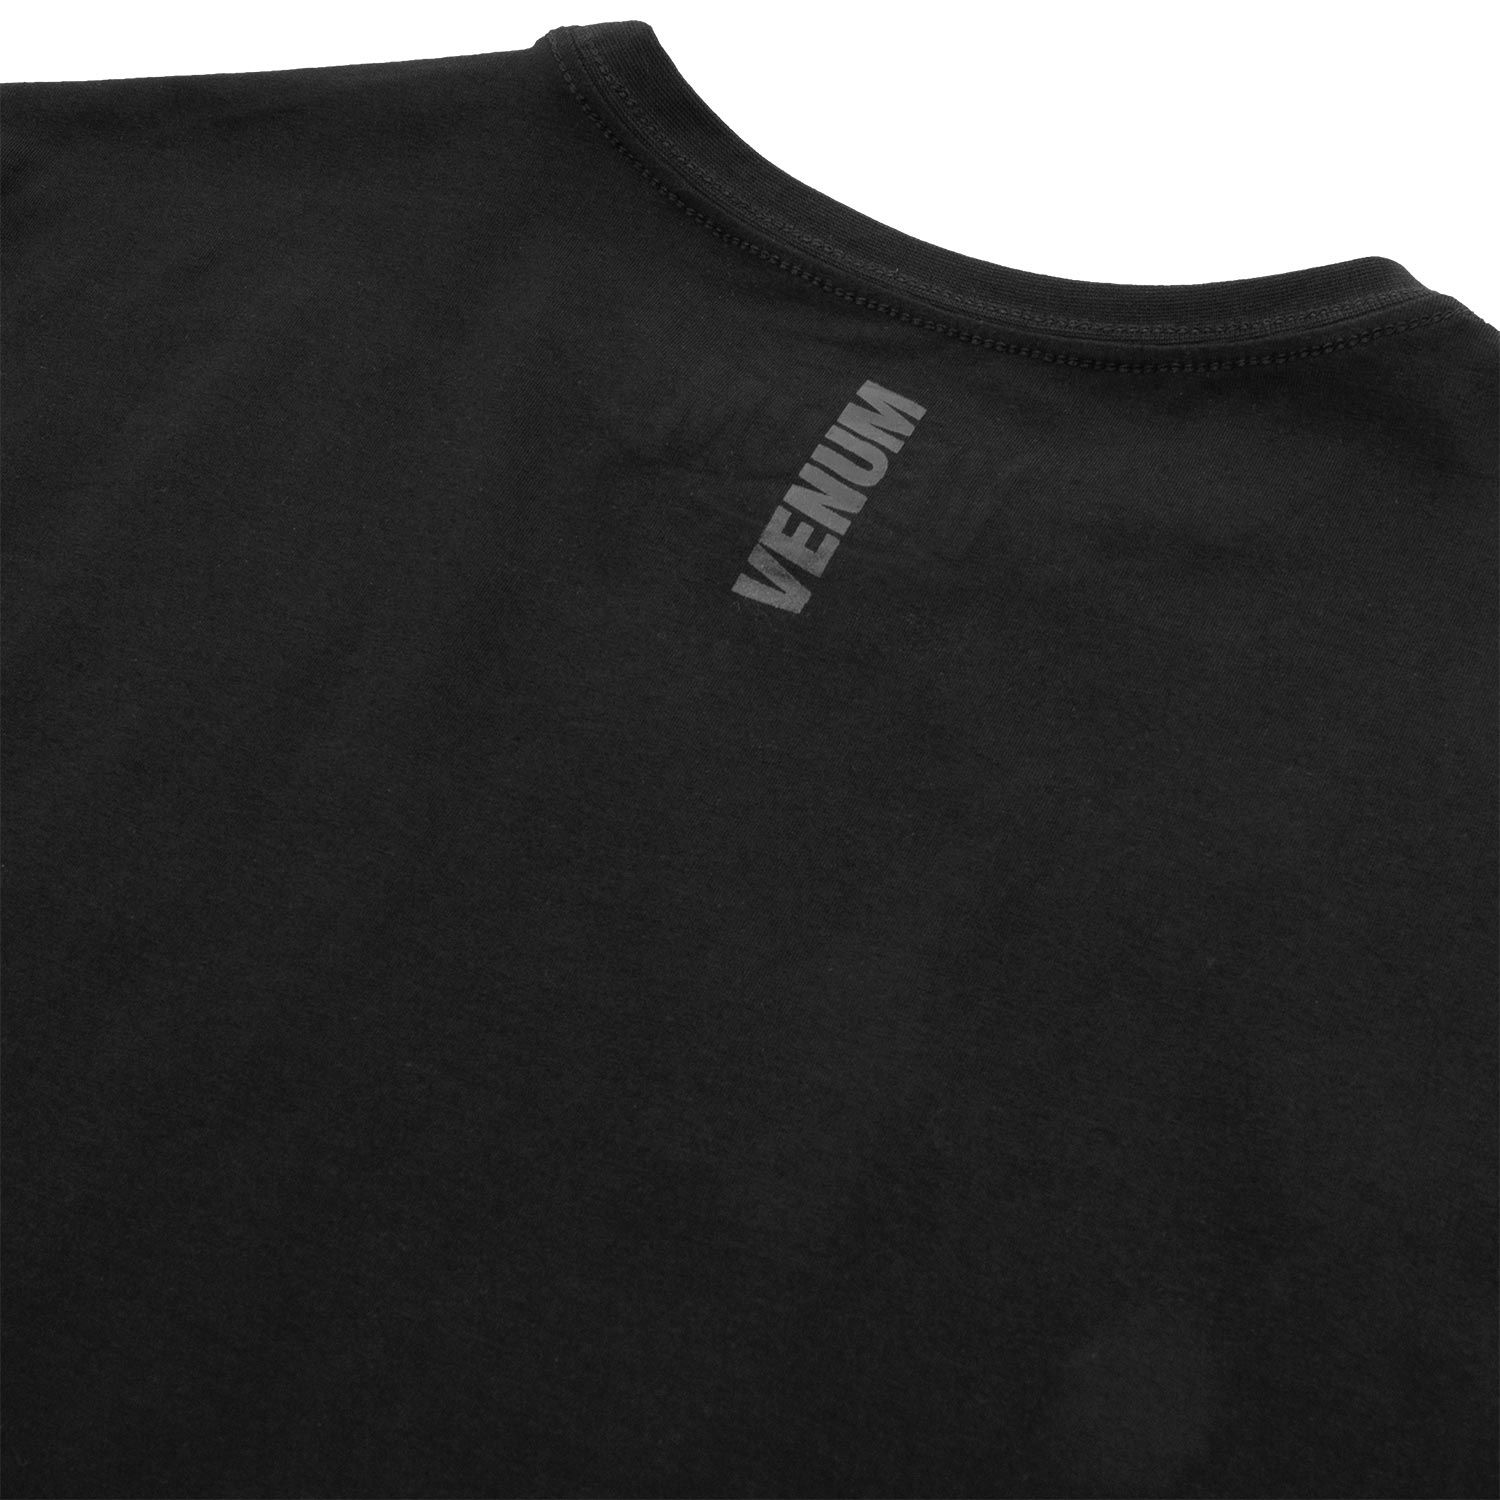 Camiseta MMA VT de Venum - Negro/Negro - Venum.com España